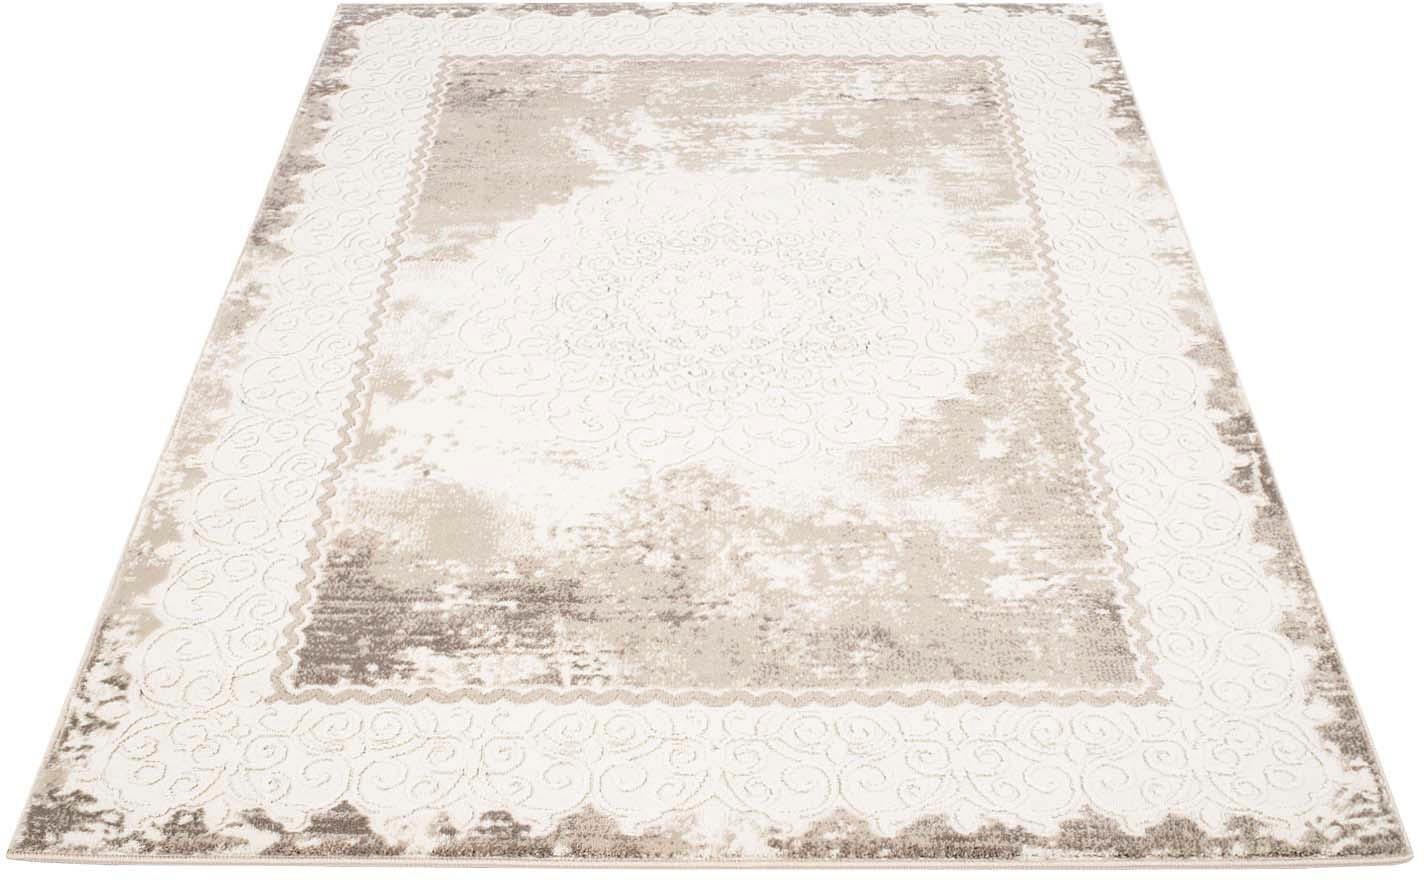 Carpet City Teppich »Platin 8058«, rechteckig, Kurzflor, Bordüre, Glänzend durch Polyester